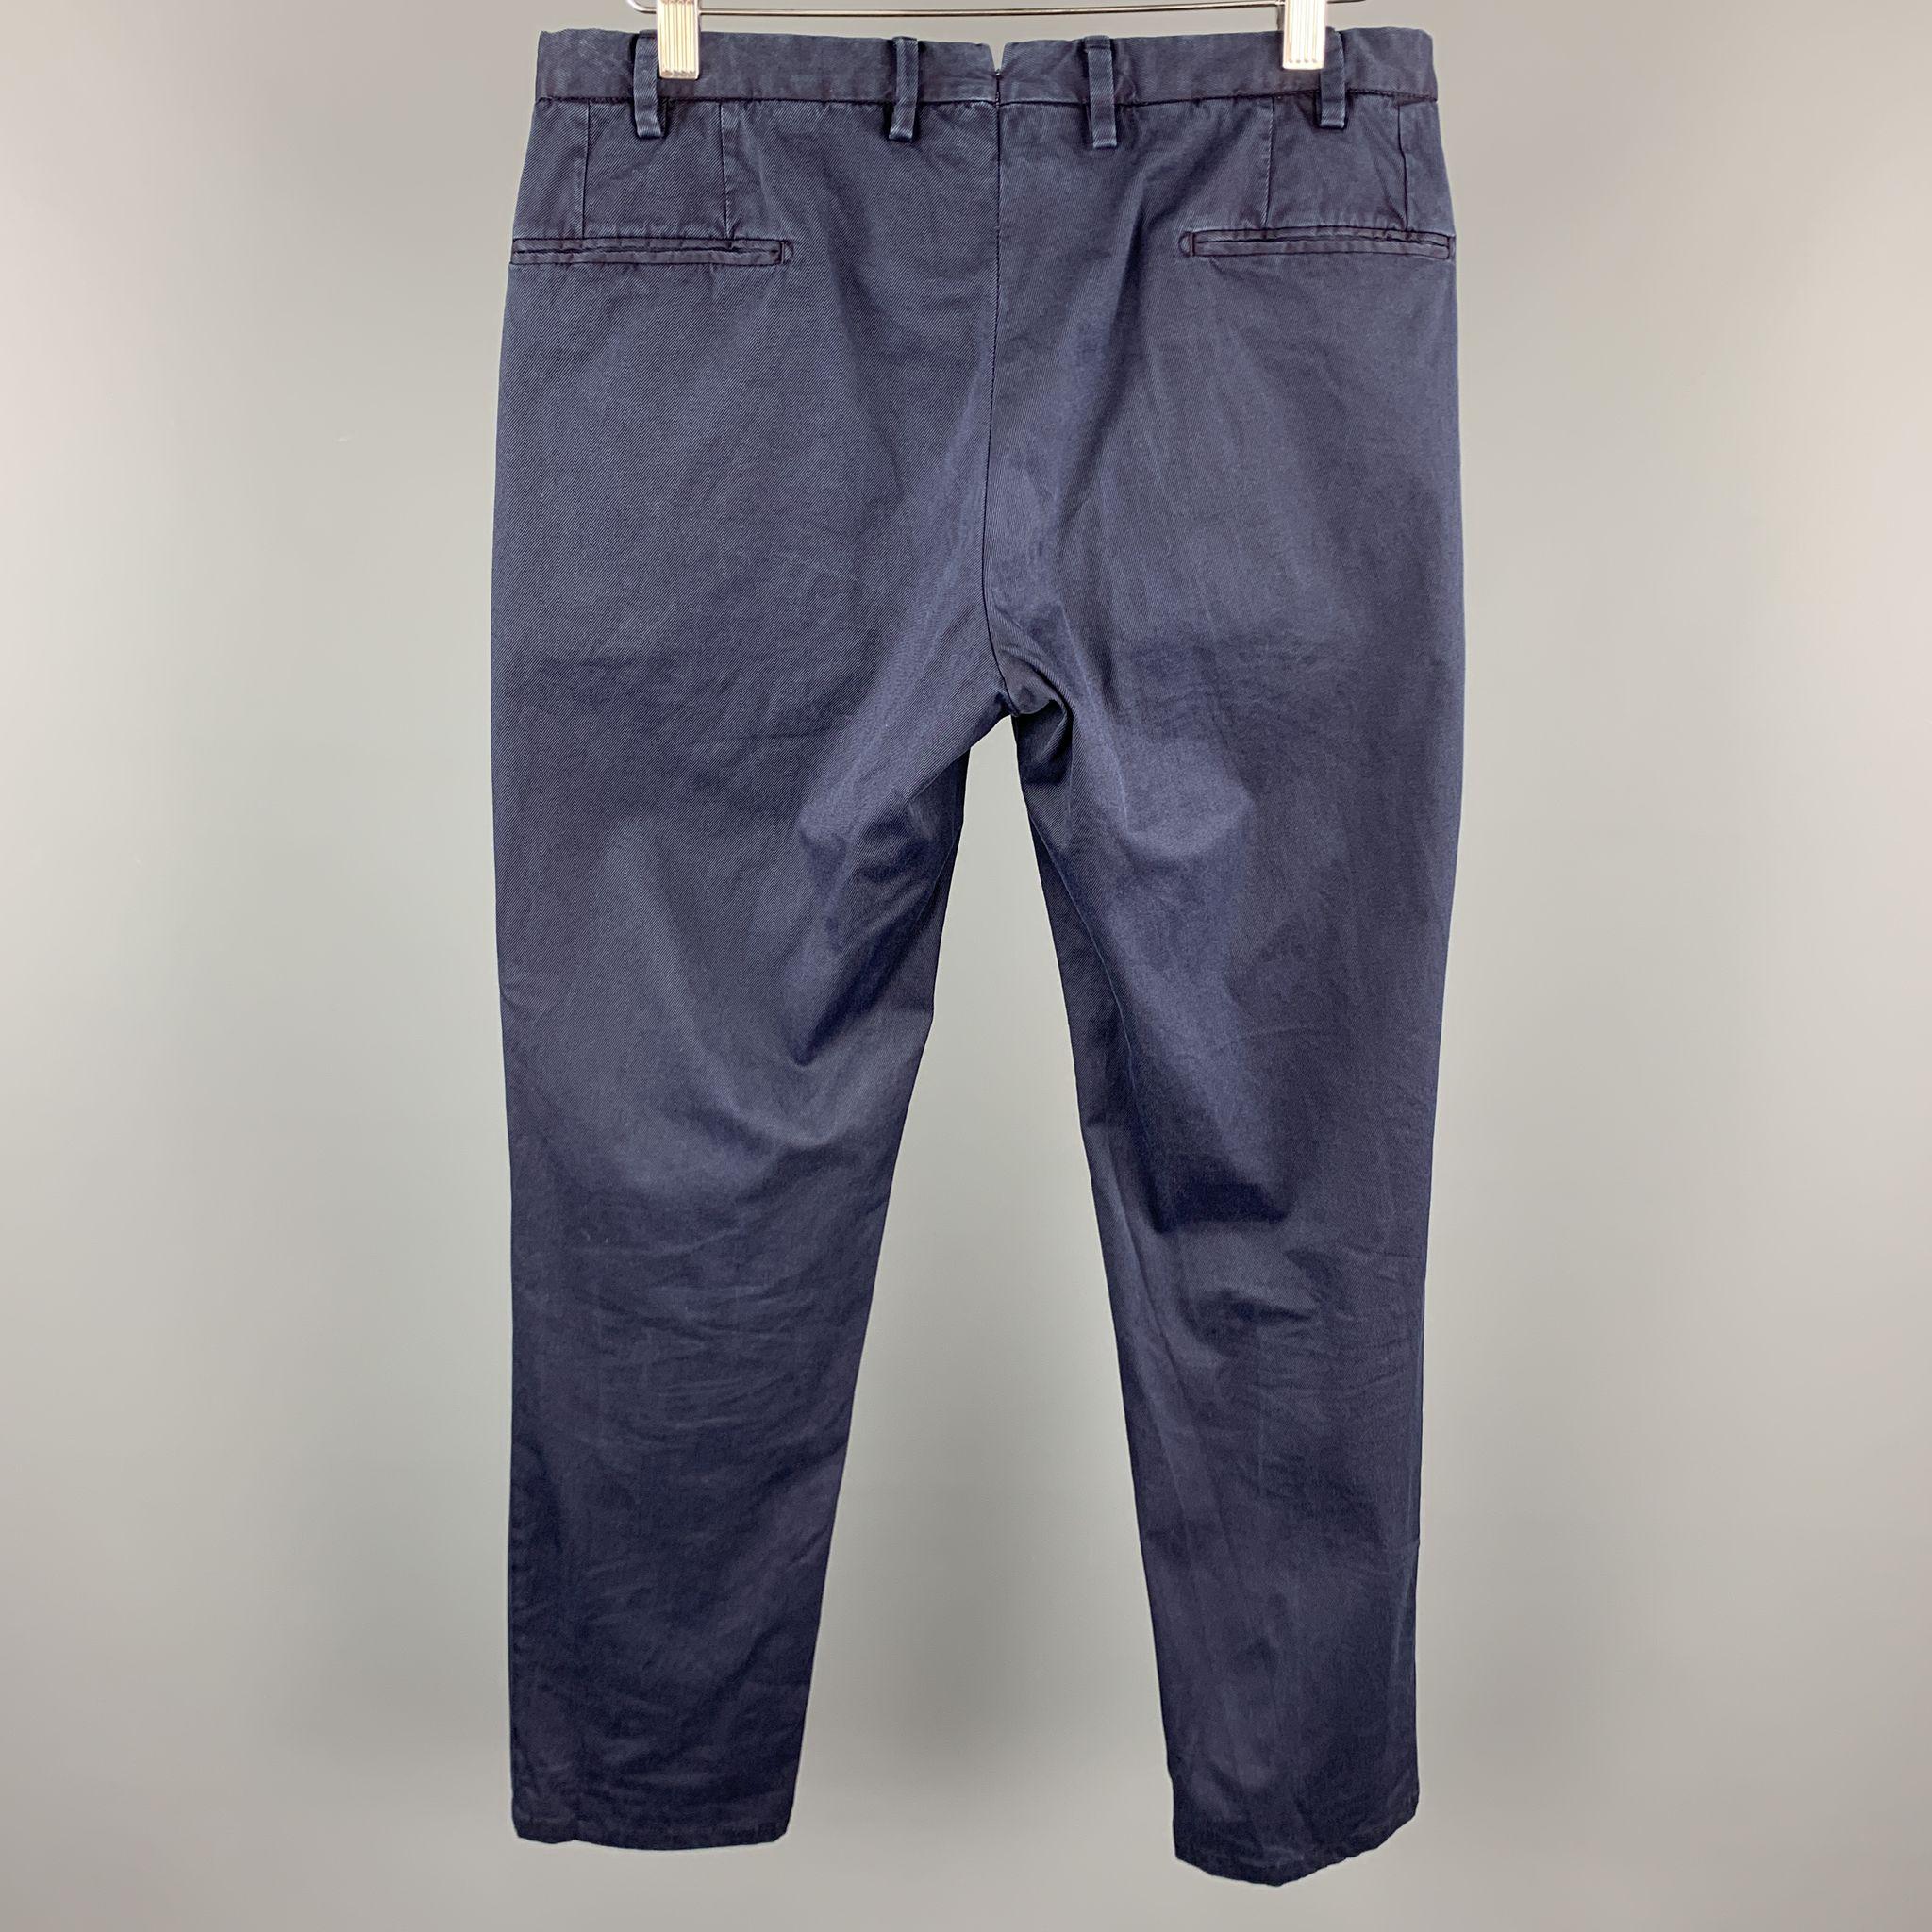 Black EREDI PISANO Size 28 x 30 Navy Cotton Zip Fly Pants